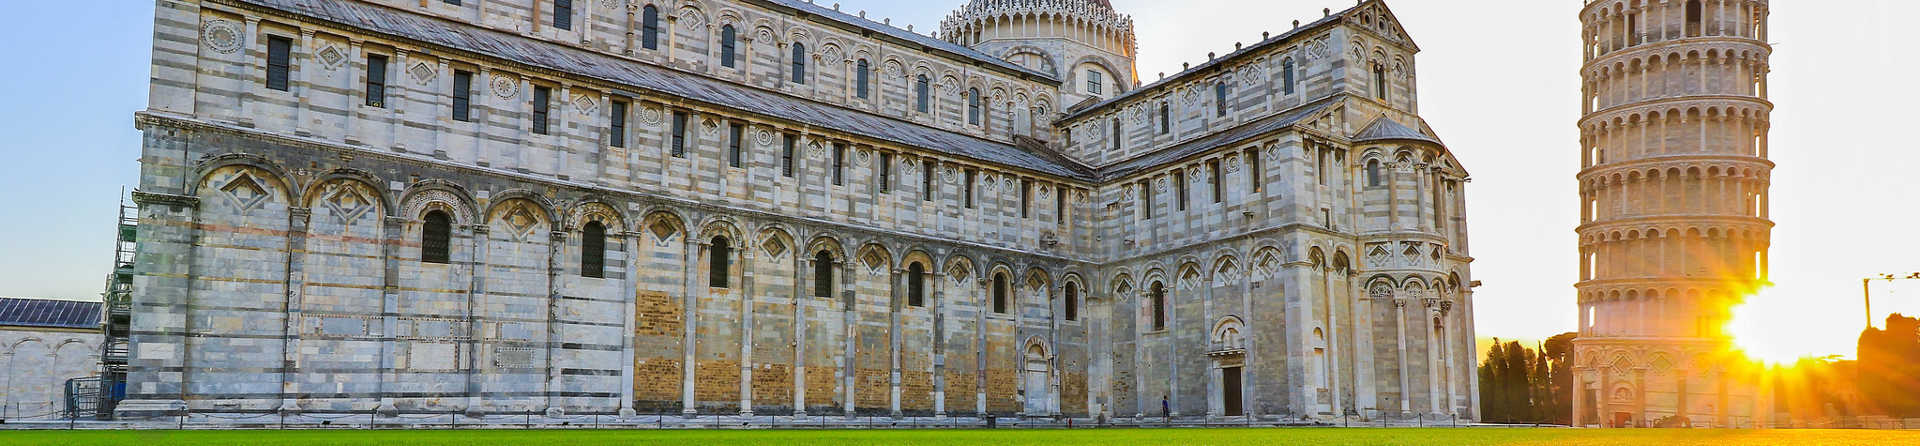 Is Pisa worth visiting?